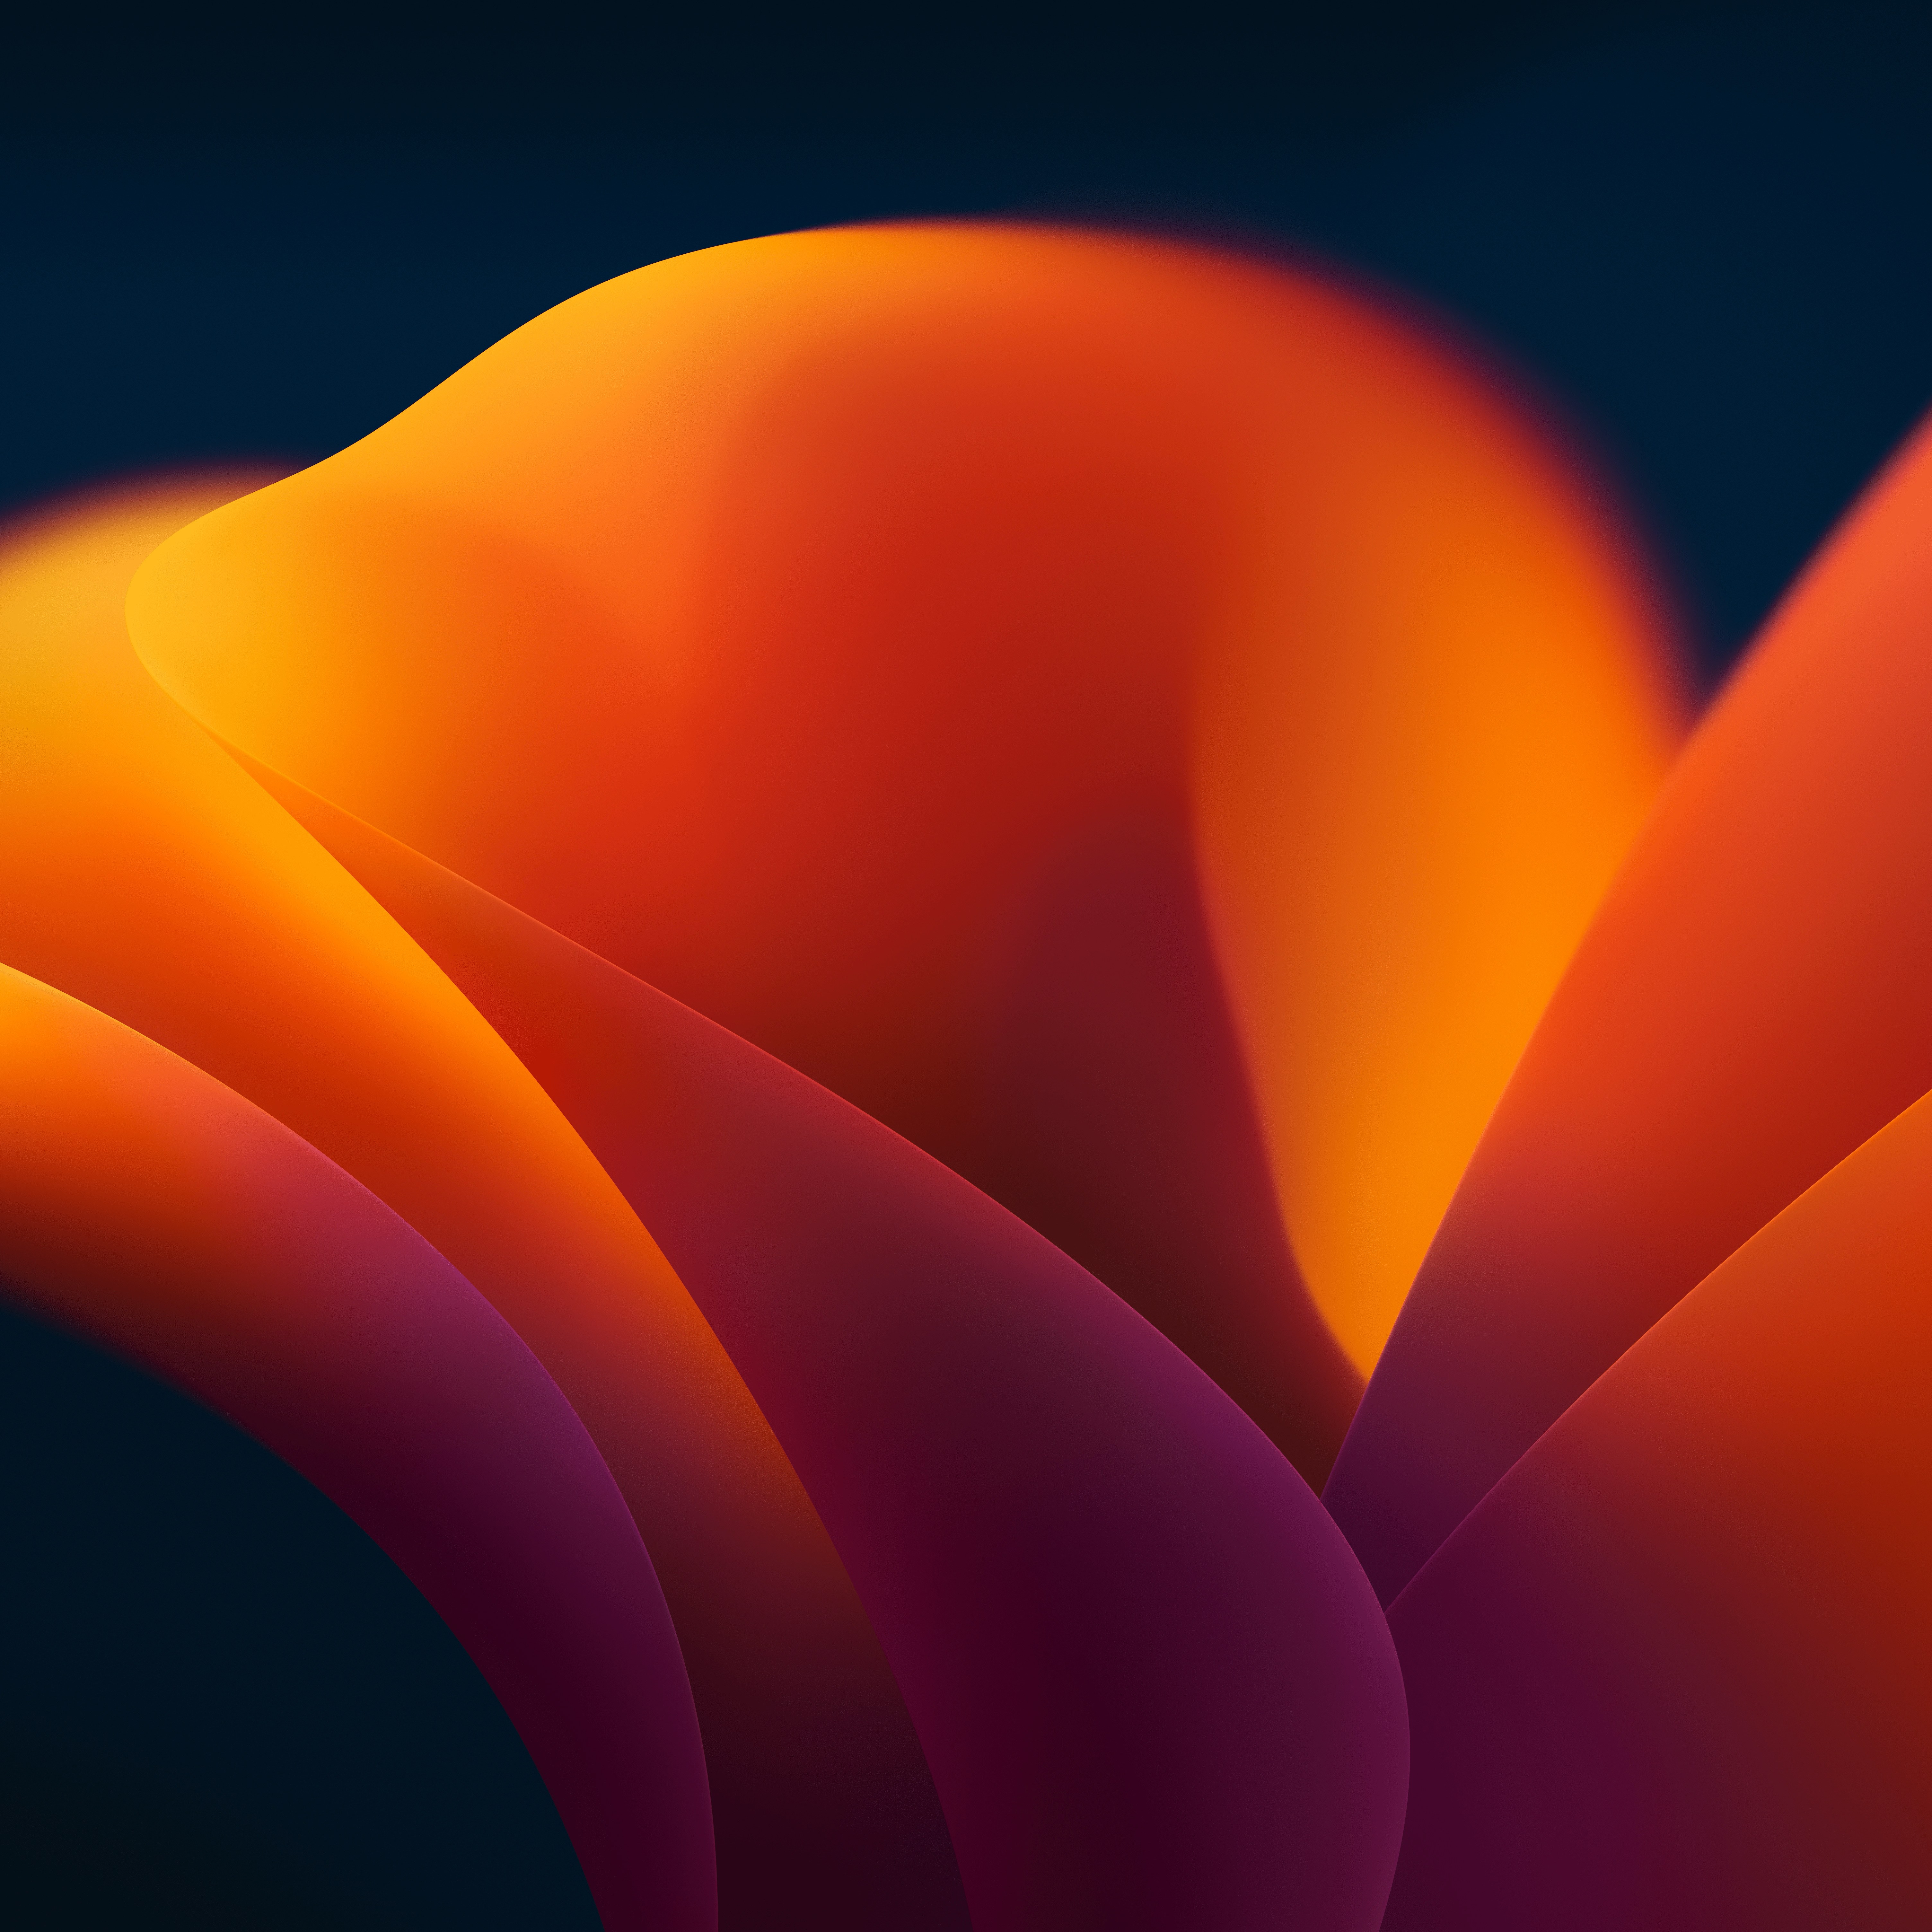 General 6016x6016 colorful orange background flowers blossoms plants dark background macOS MacOS Ventura abstract digital art